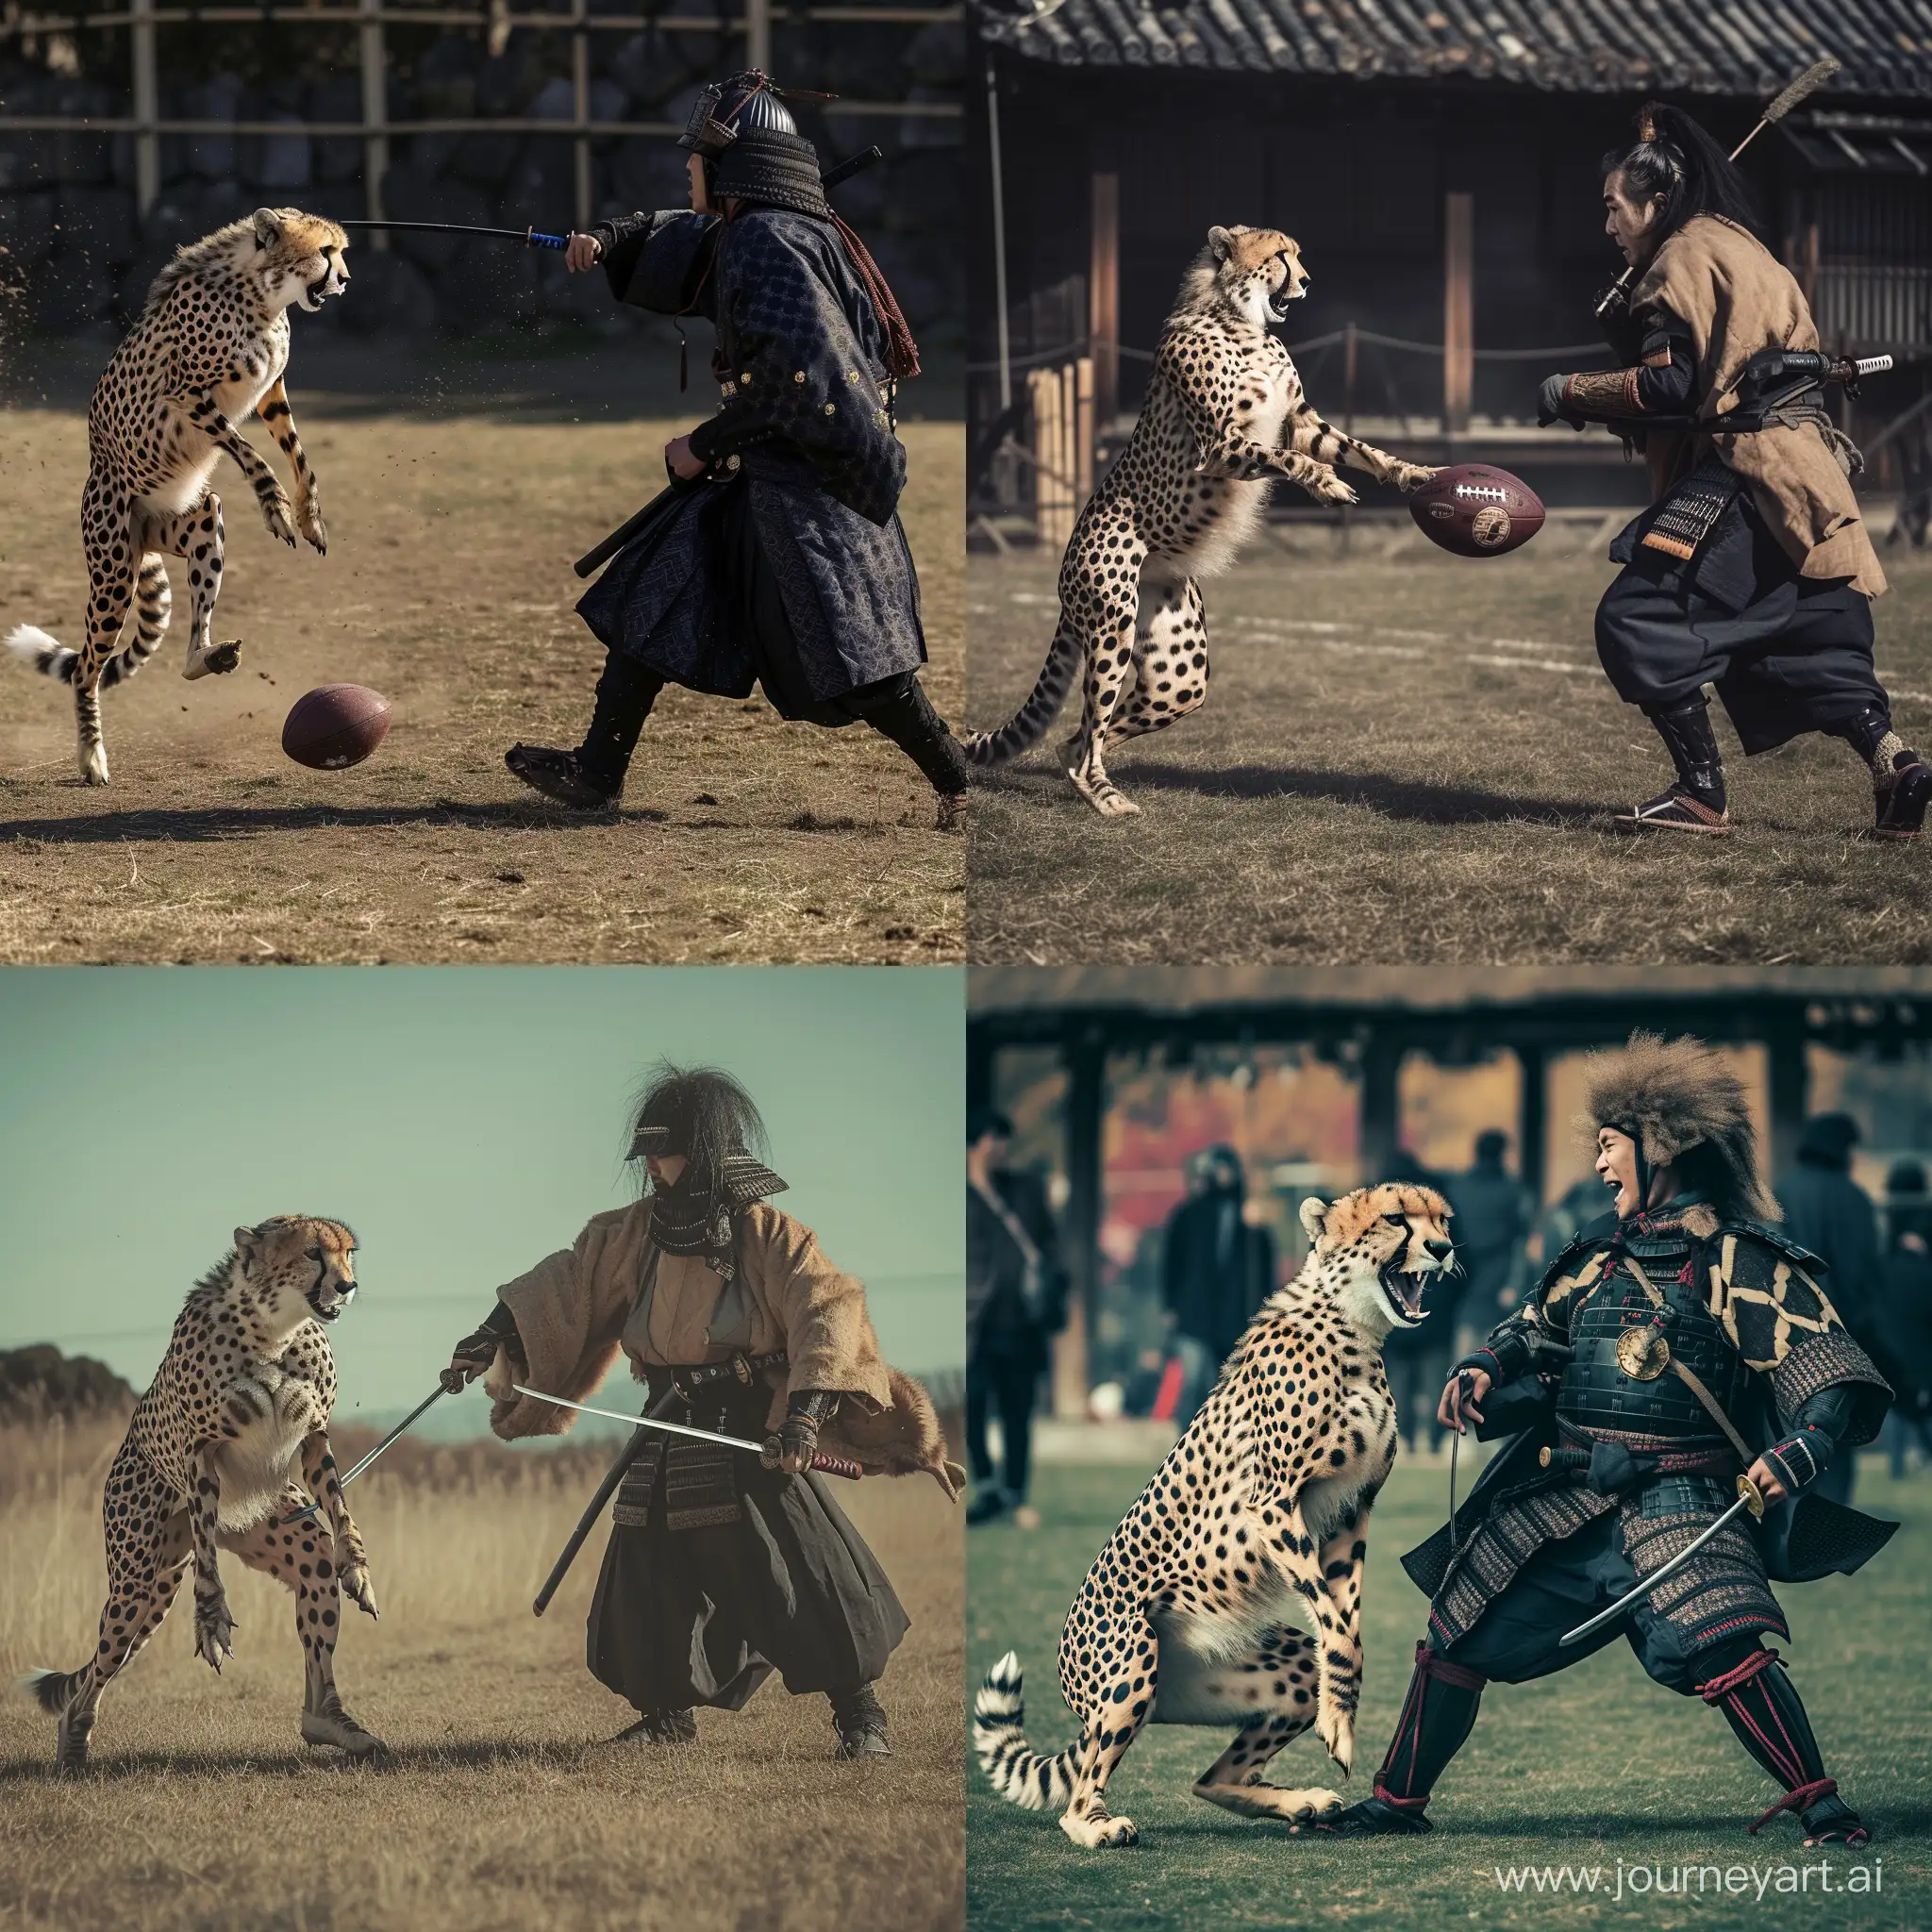 The Iranian cheetah defeated the Japanese samurai on the football field, aesthetic photography 